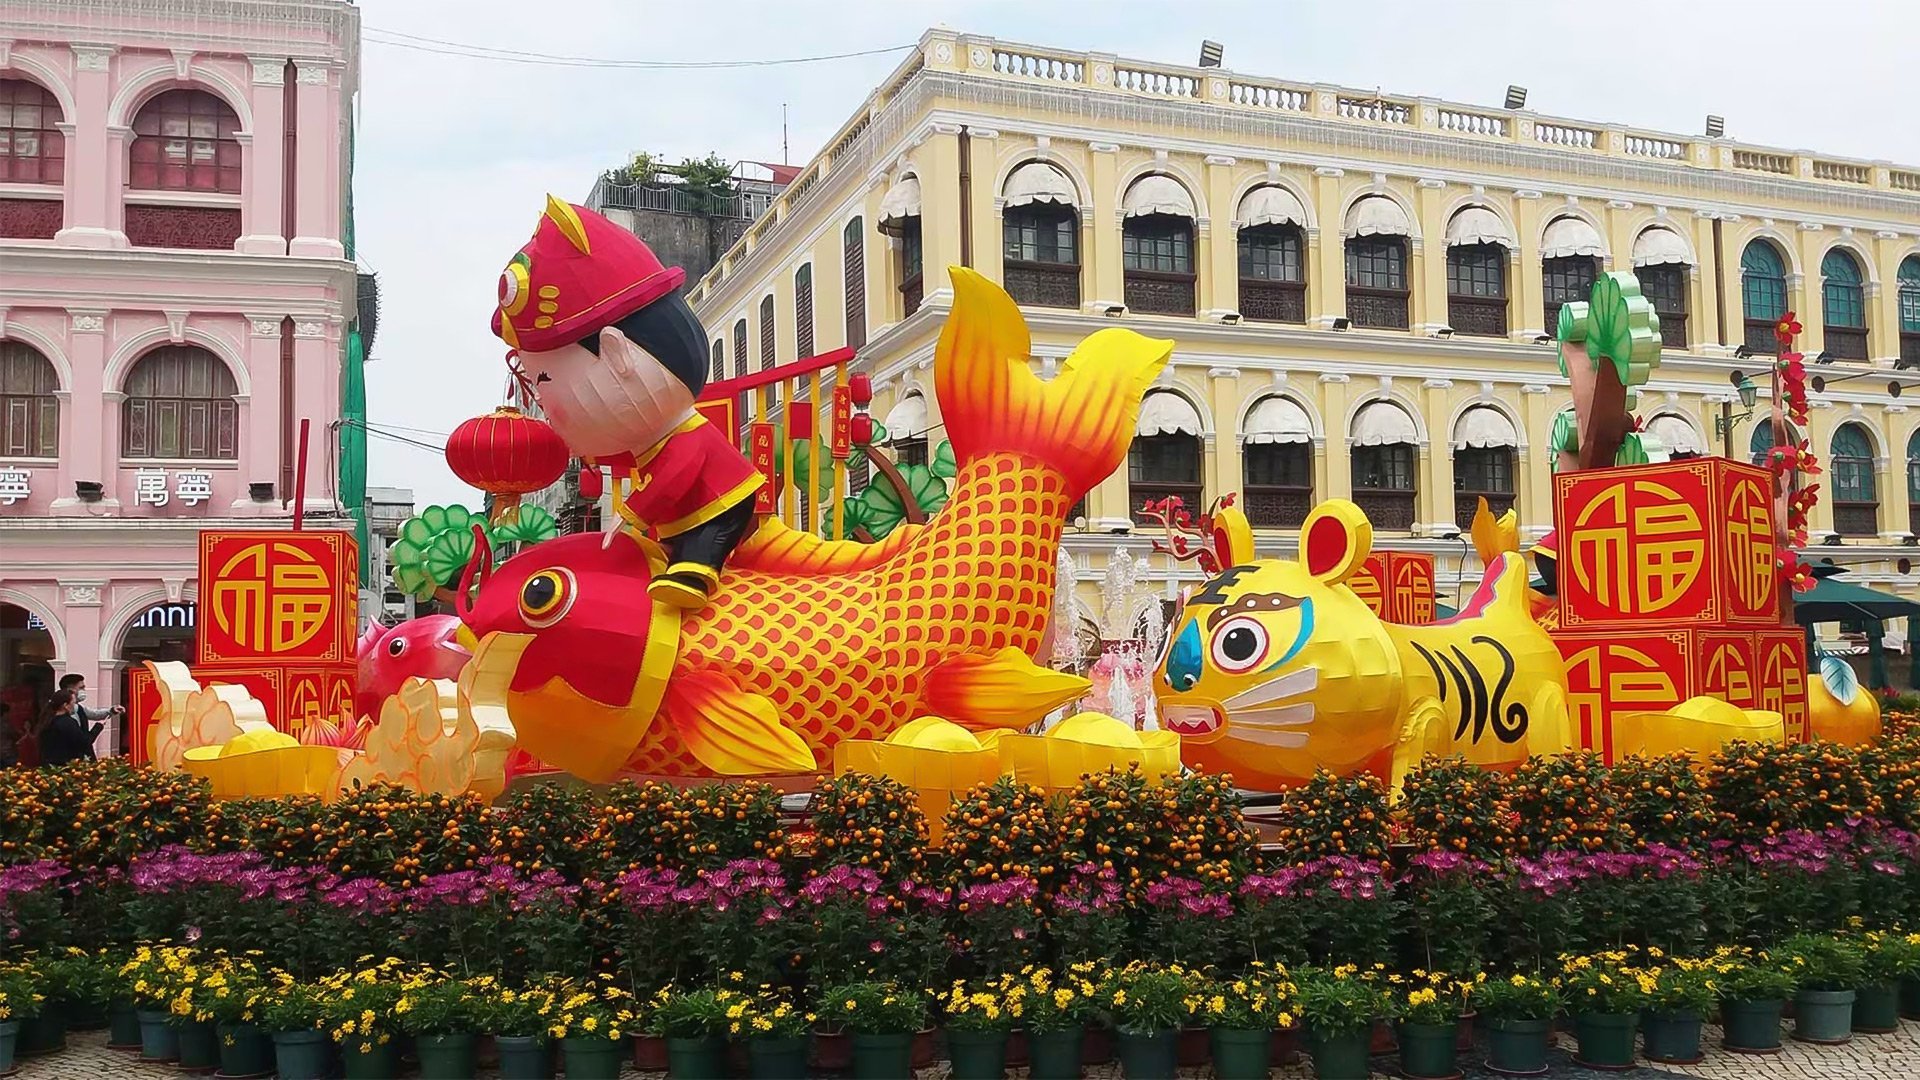 Macau casino stocks surge on strong Lunar New Year tourist arrivals